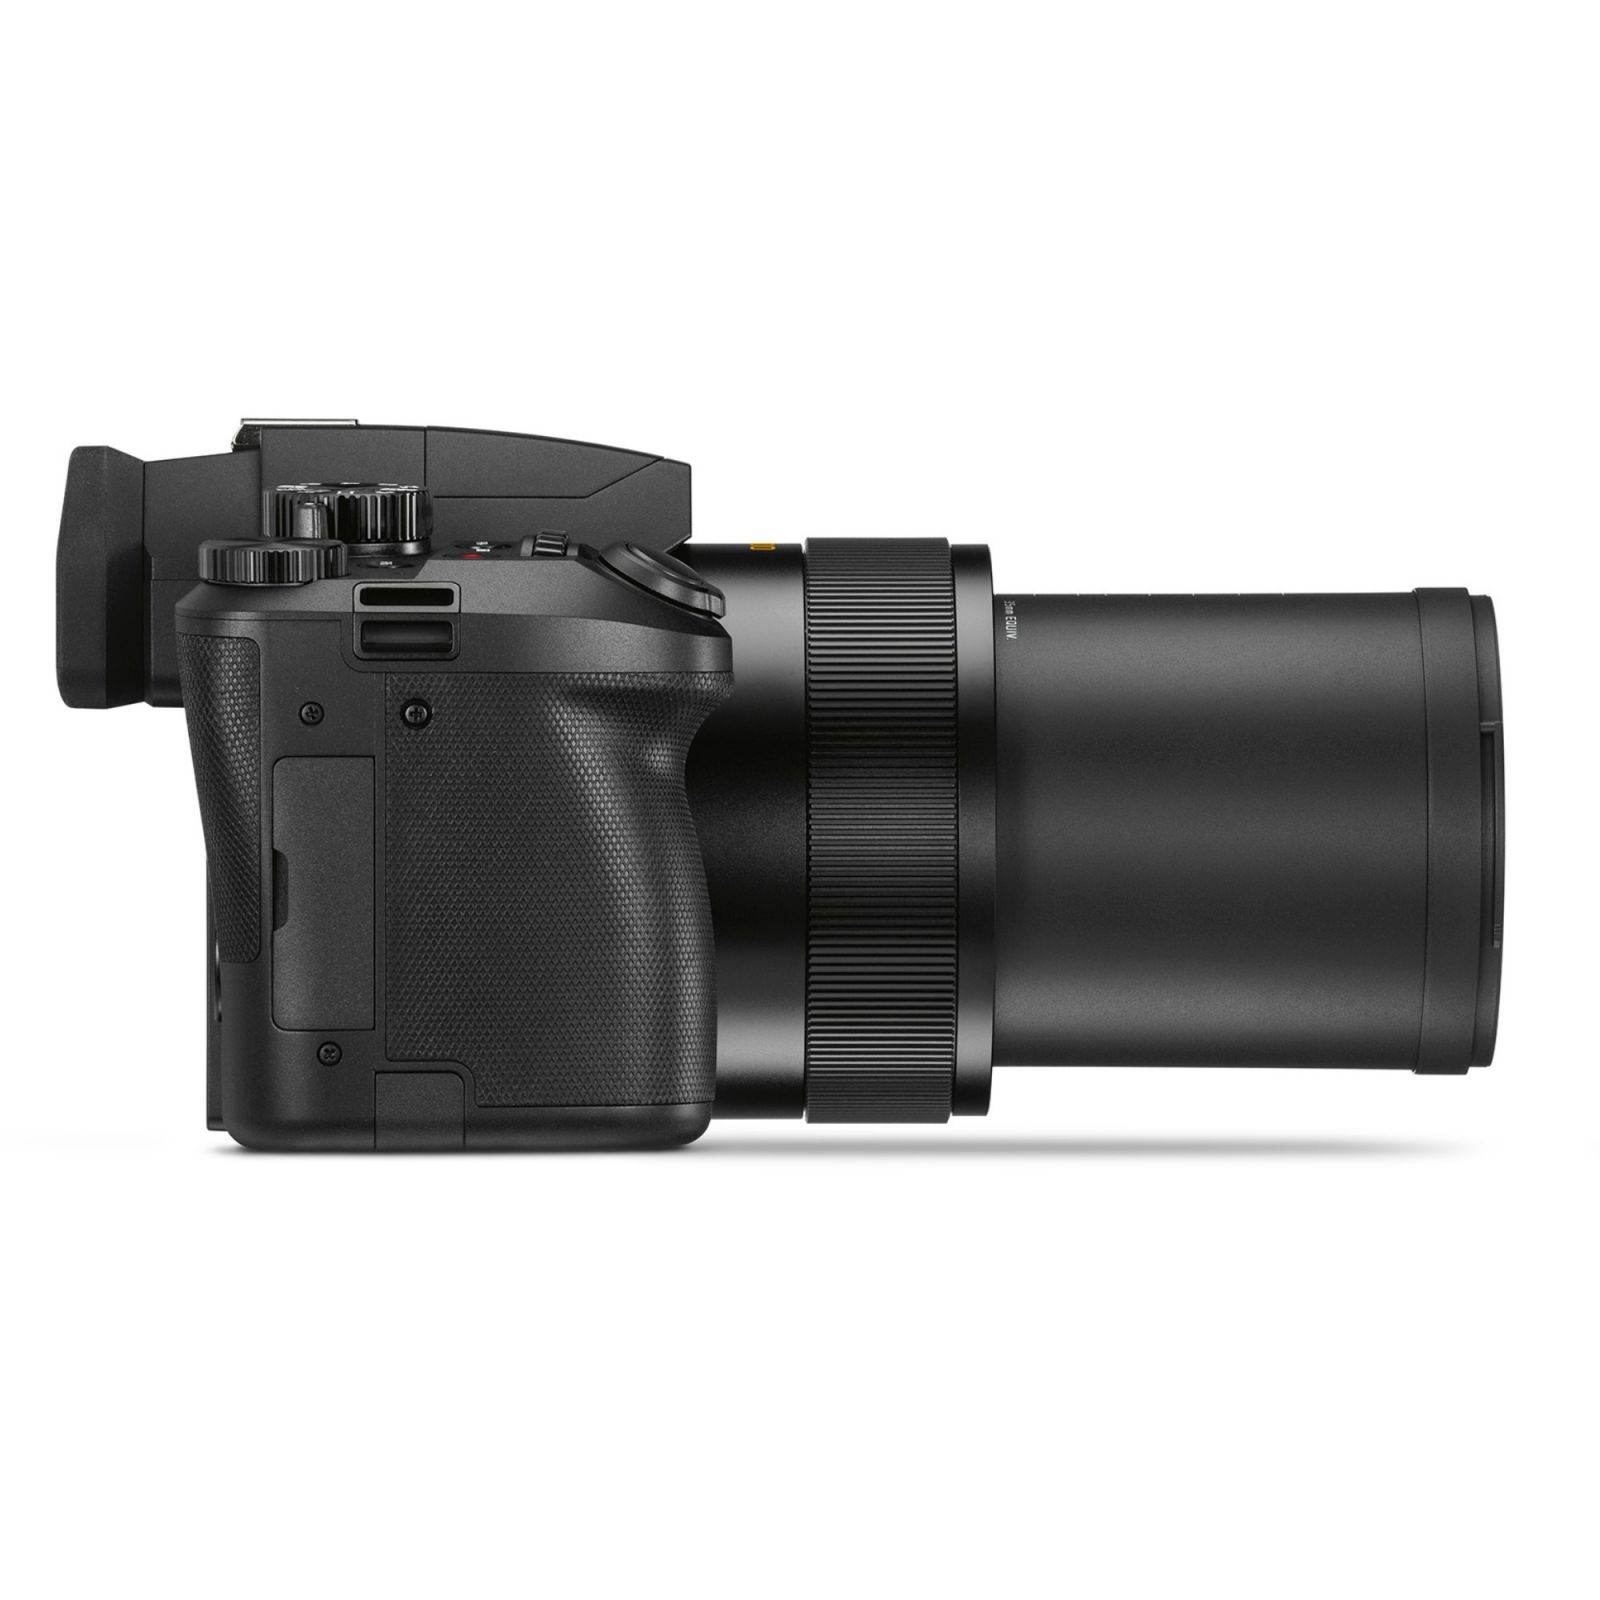 Leica-V-LUX-5-camera-5.jpg